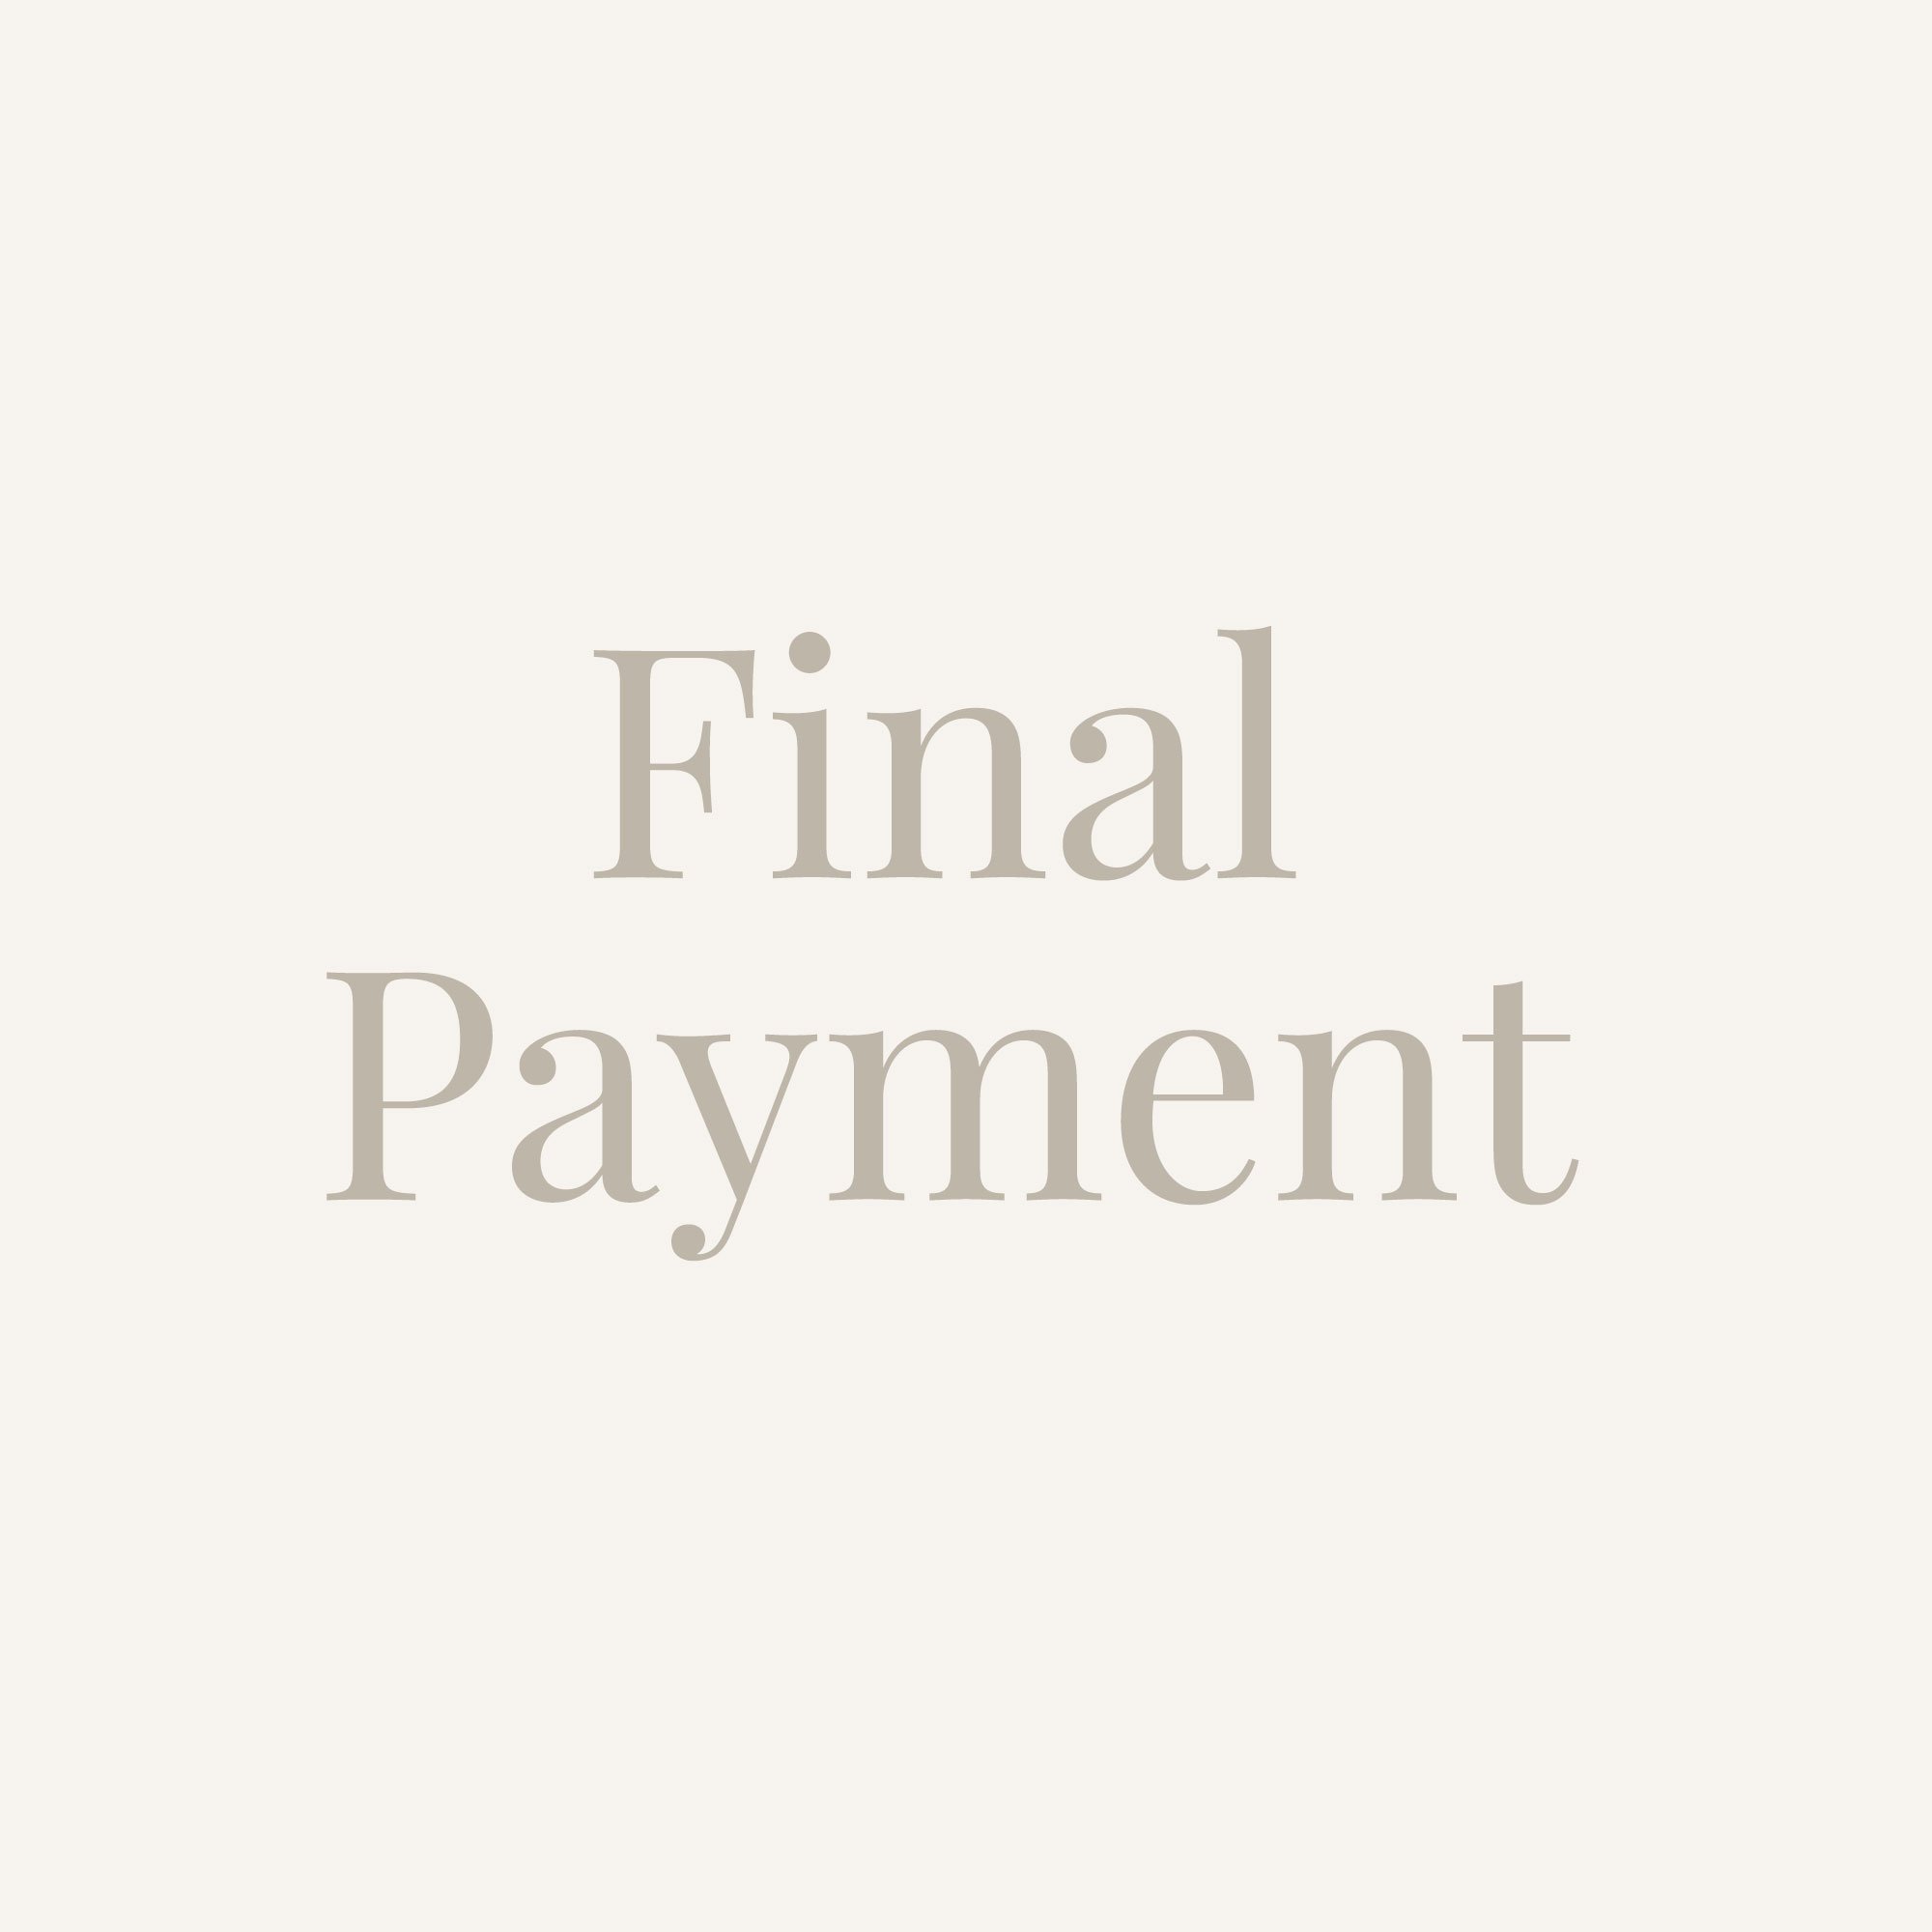 final-payment-kaitlinkb